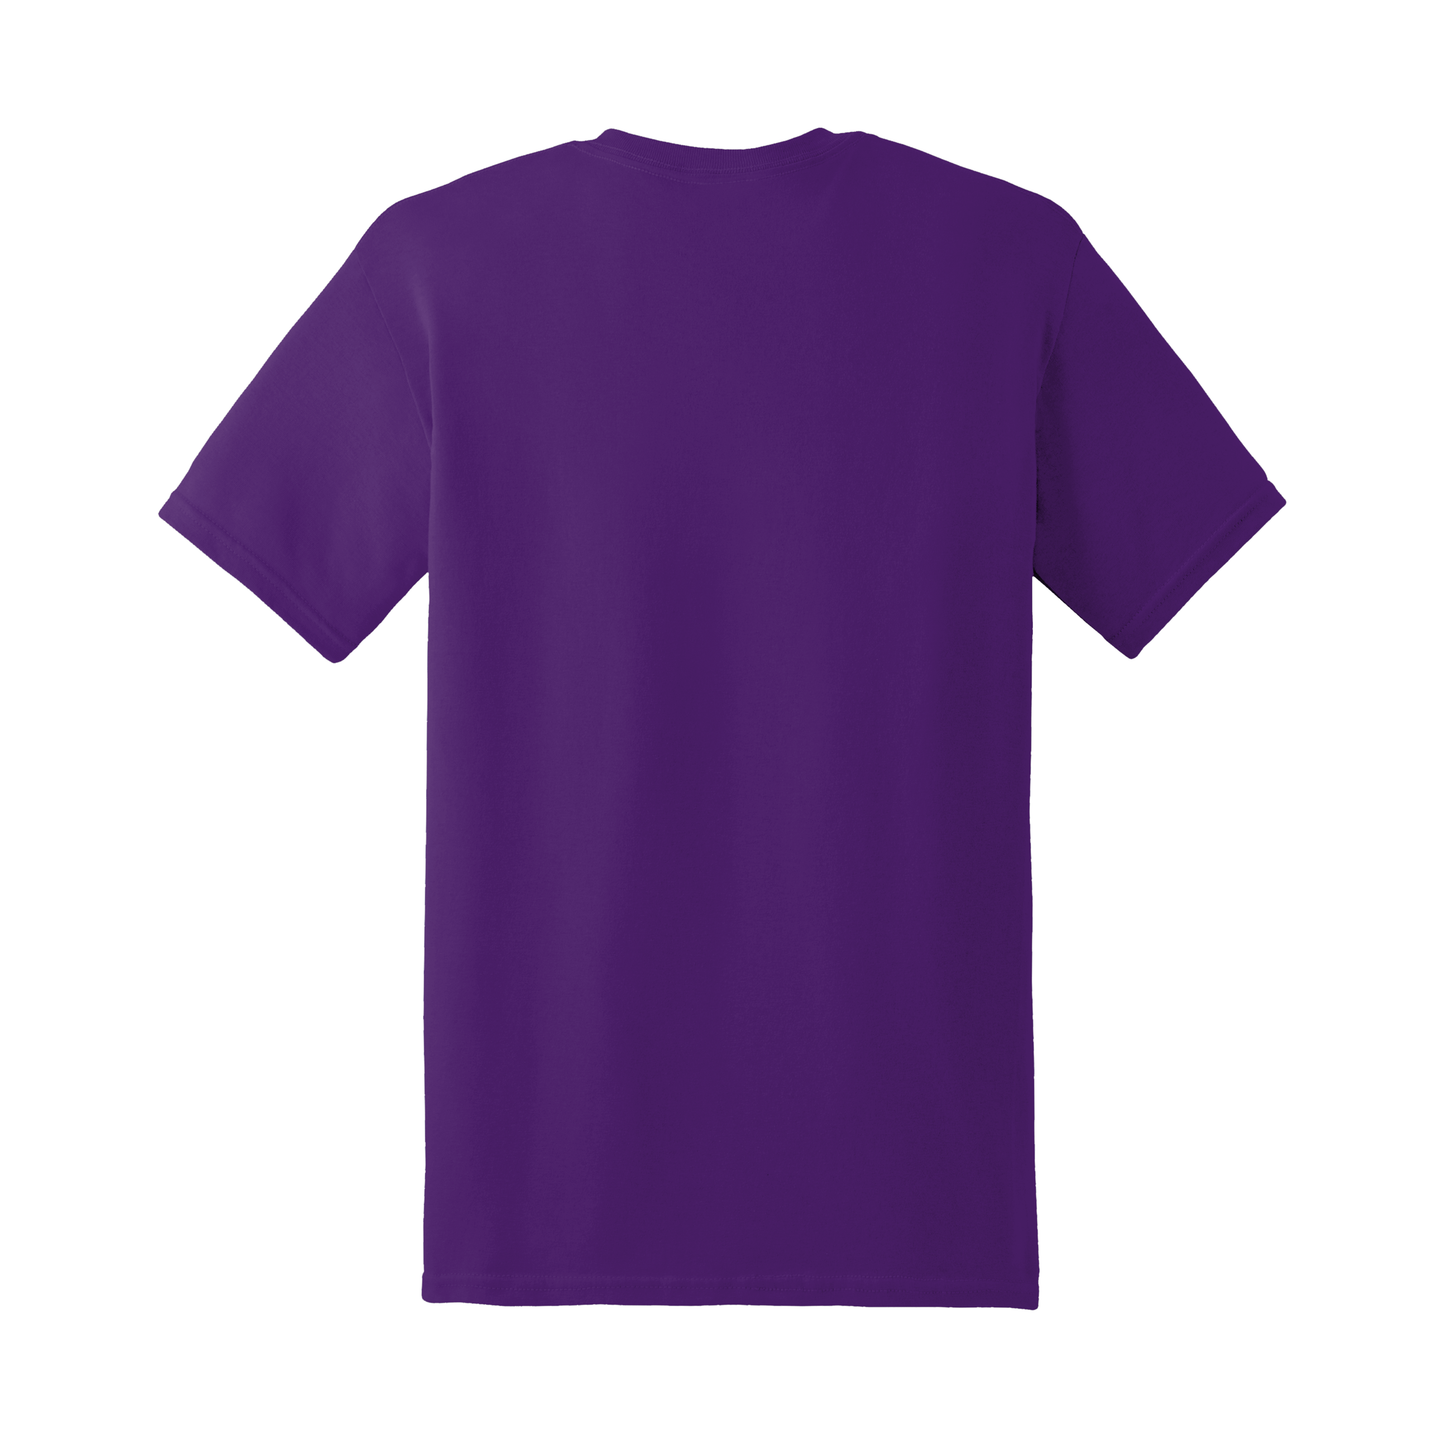 Gildan Purple SoftStyle 64000